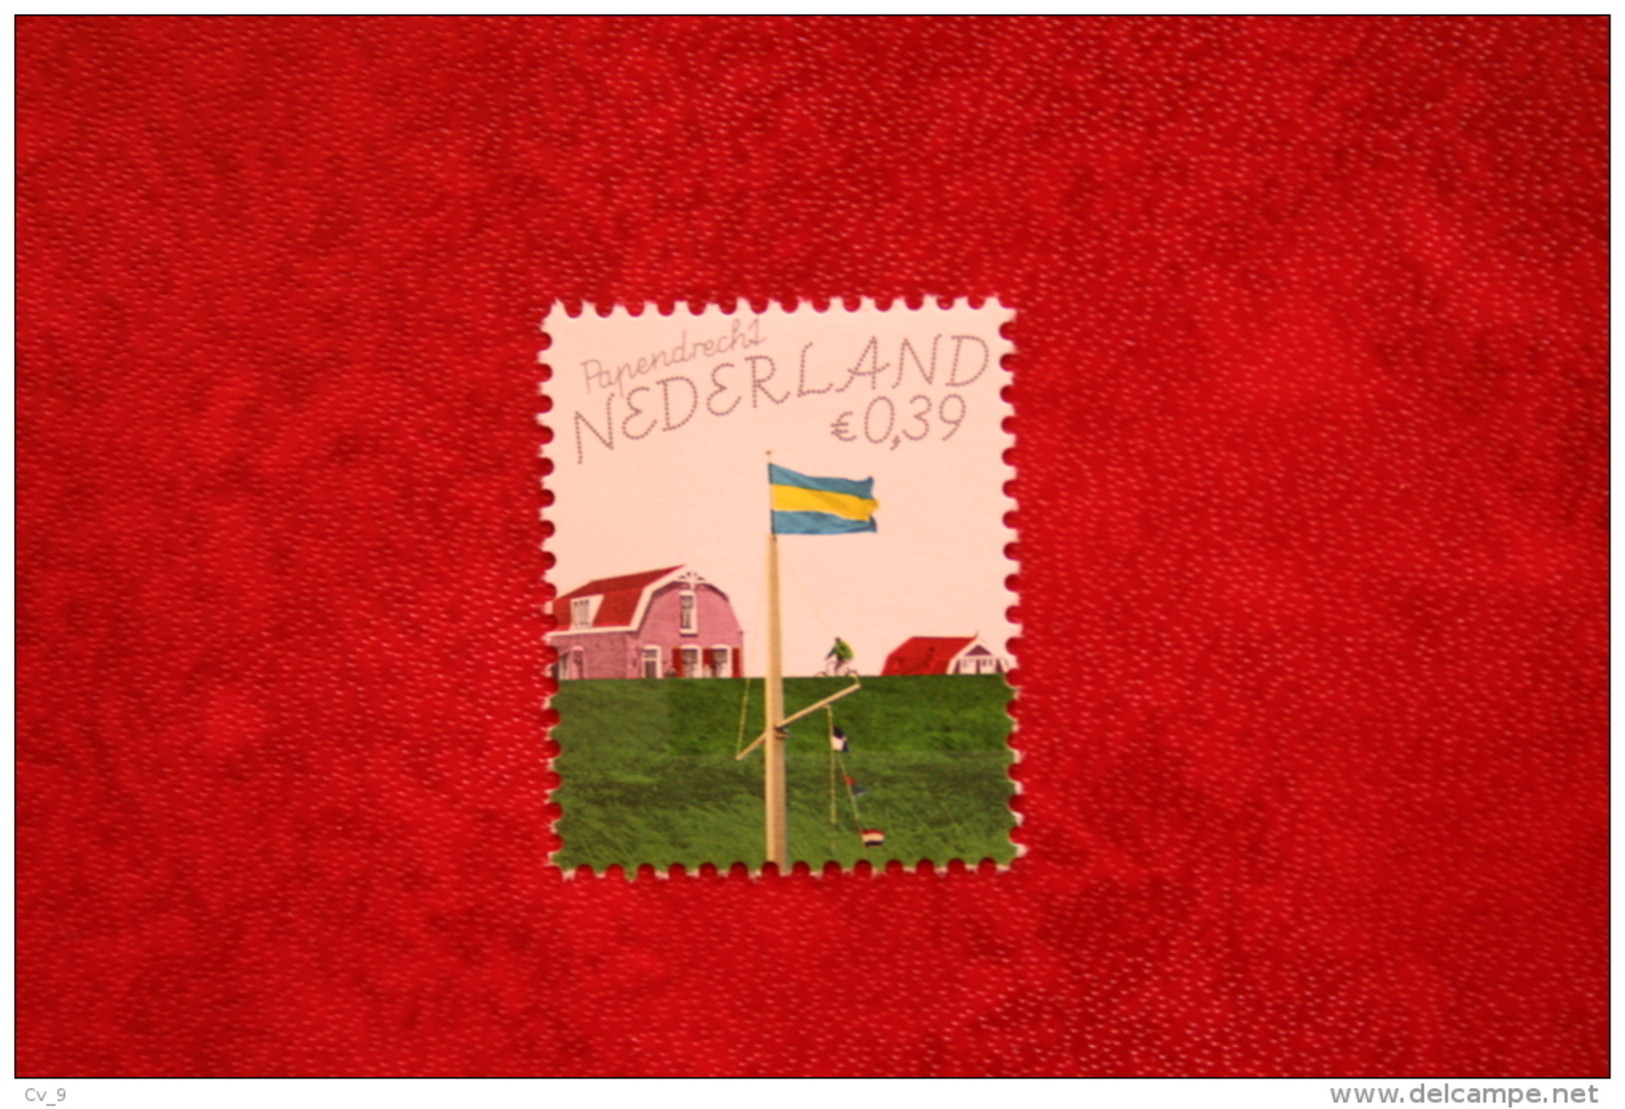 Mooi Nederland Papendrecht ; NVPH 2363 (Mi 2337) ; 2005 POSTFRIS / MNH ** NEDERLAND / NIEDERLANDE / NETHERLANDS - Neufs